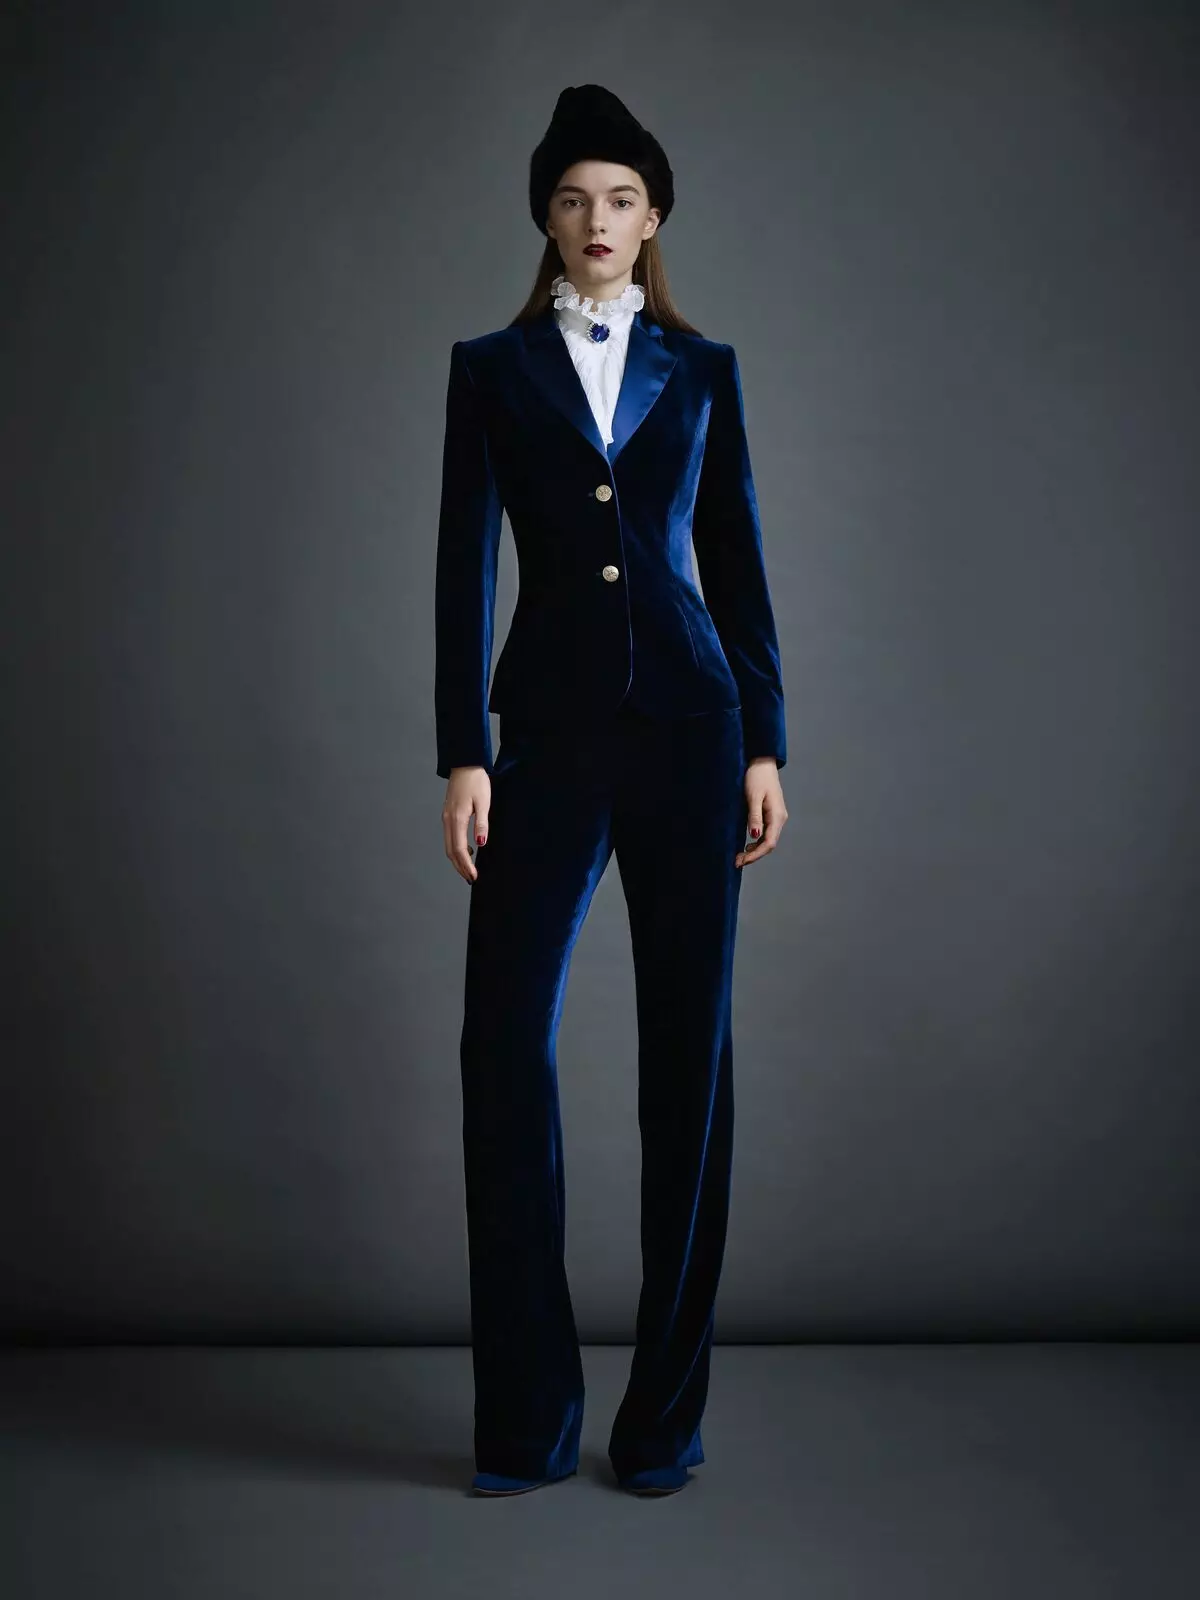 Trouser Կանացի զգեստներ 2021 (242 լուսանկար). Նոր եւ նորաձեւության միտումները, Chanel ոճը 14844_128